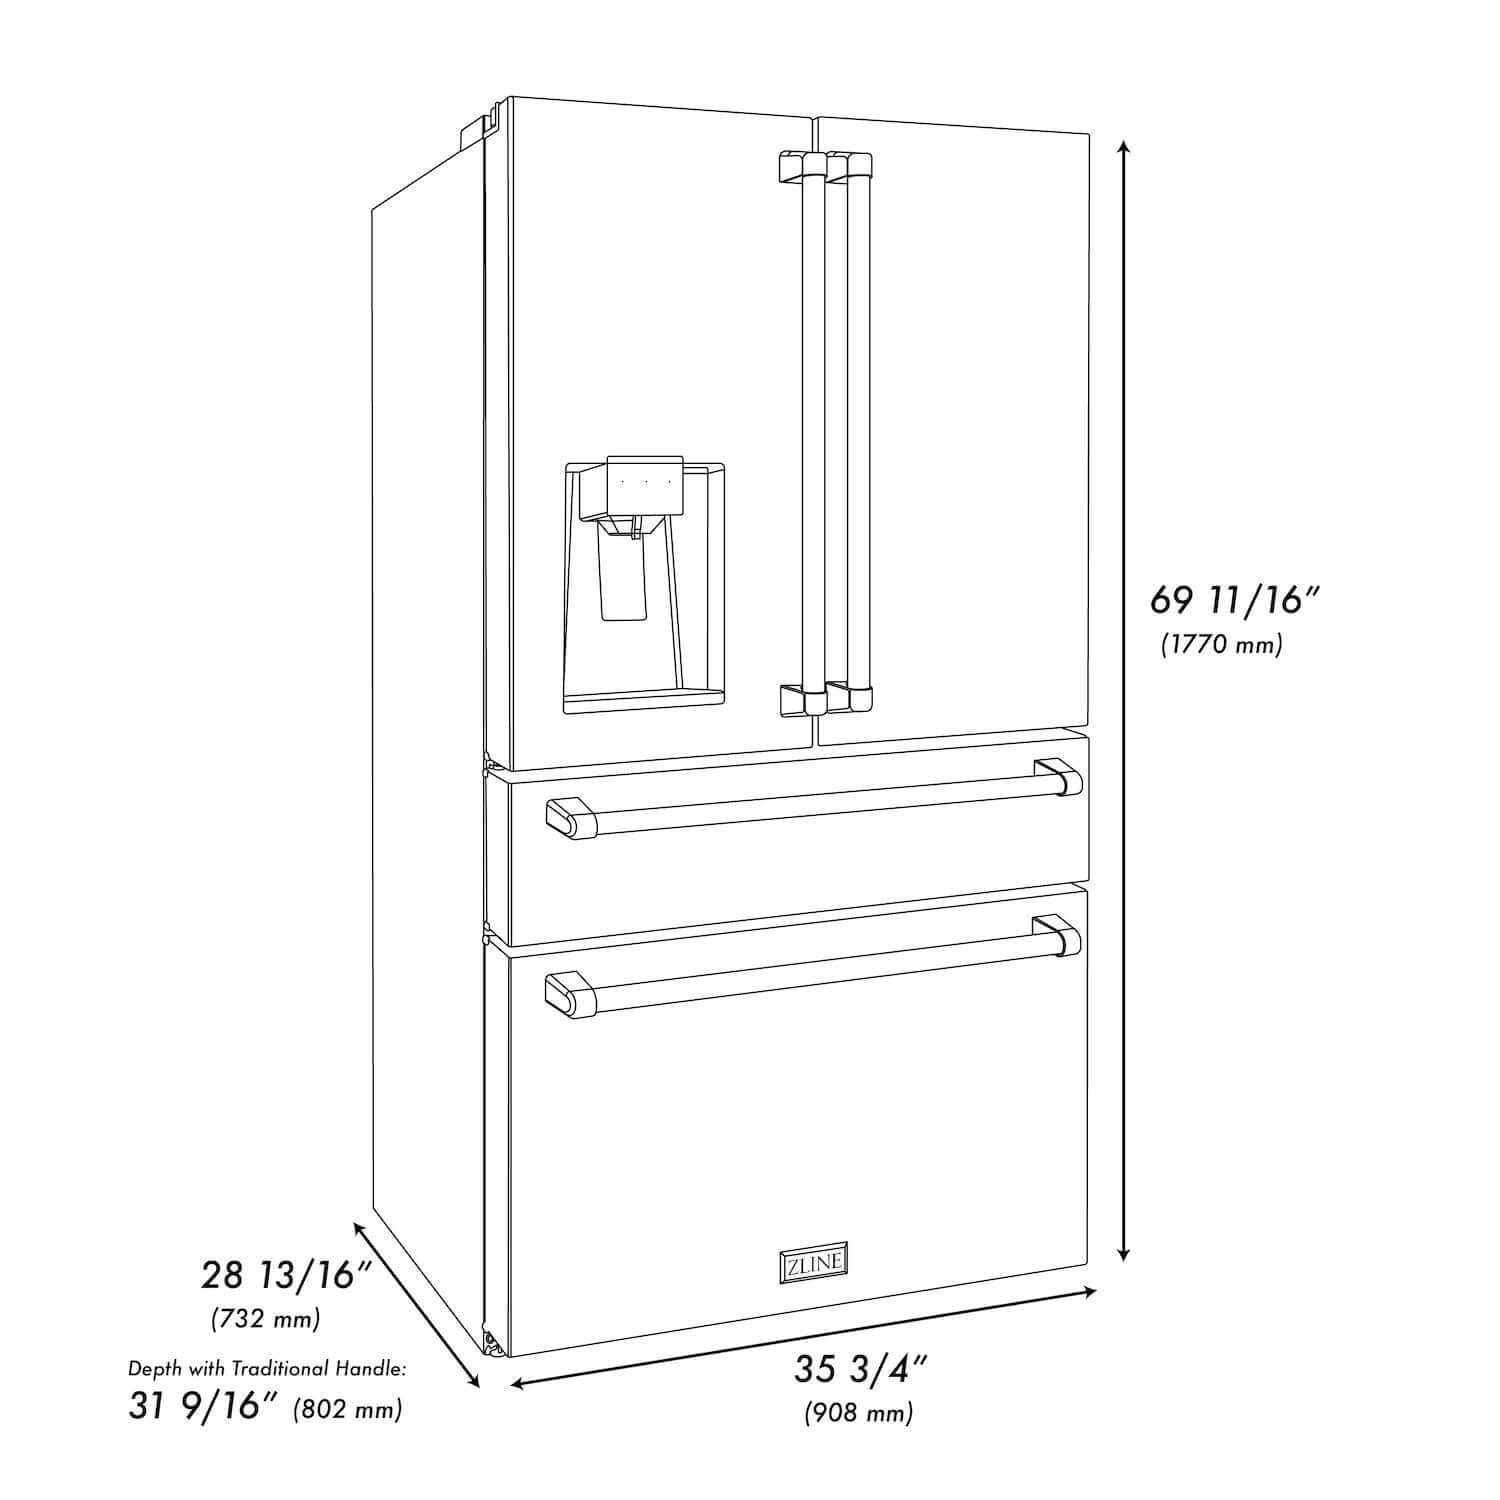 ZLINE 36" French door refrigerator (RFM-36) dimensional diagram.